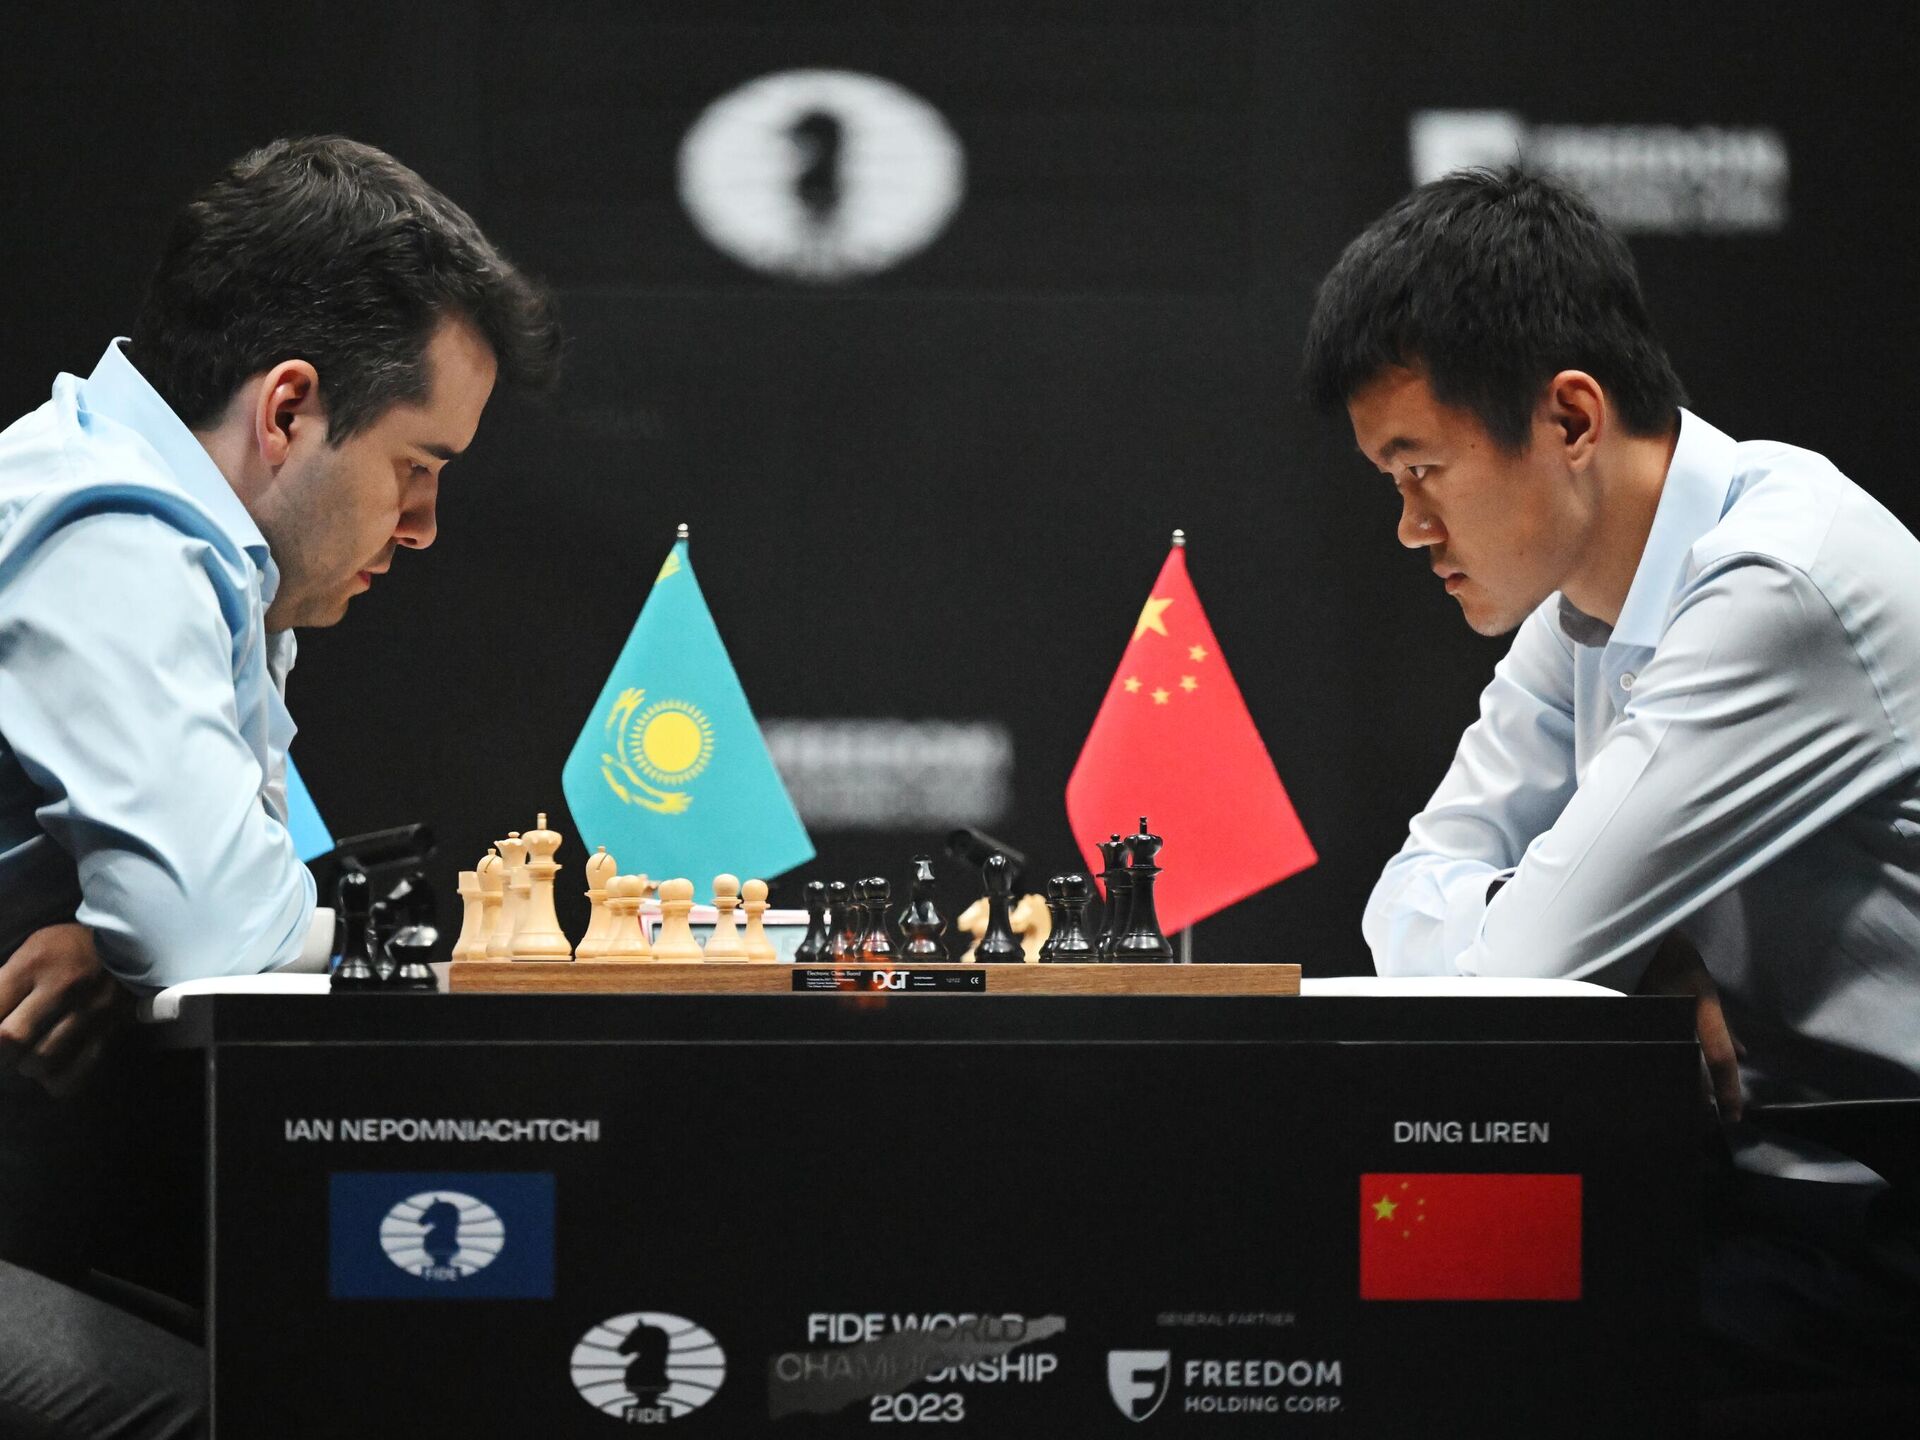 Ding Liren Defeats Ian Nepomniachtchi in World Chess Championship